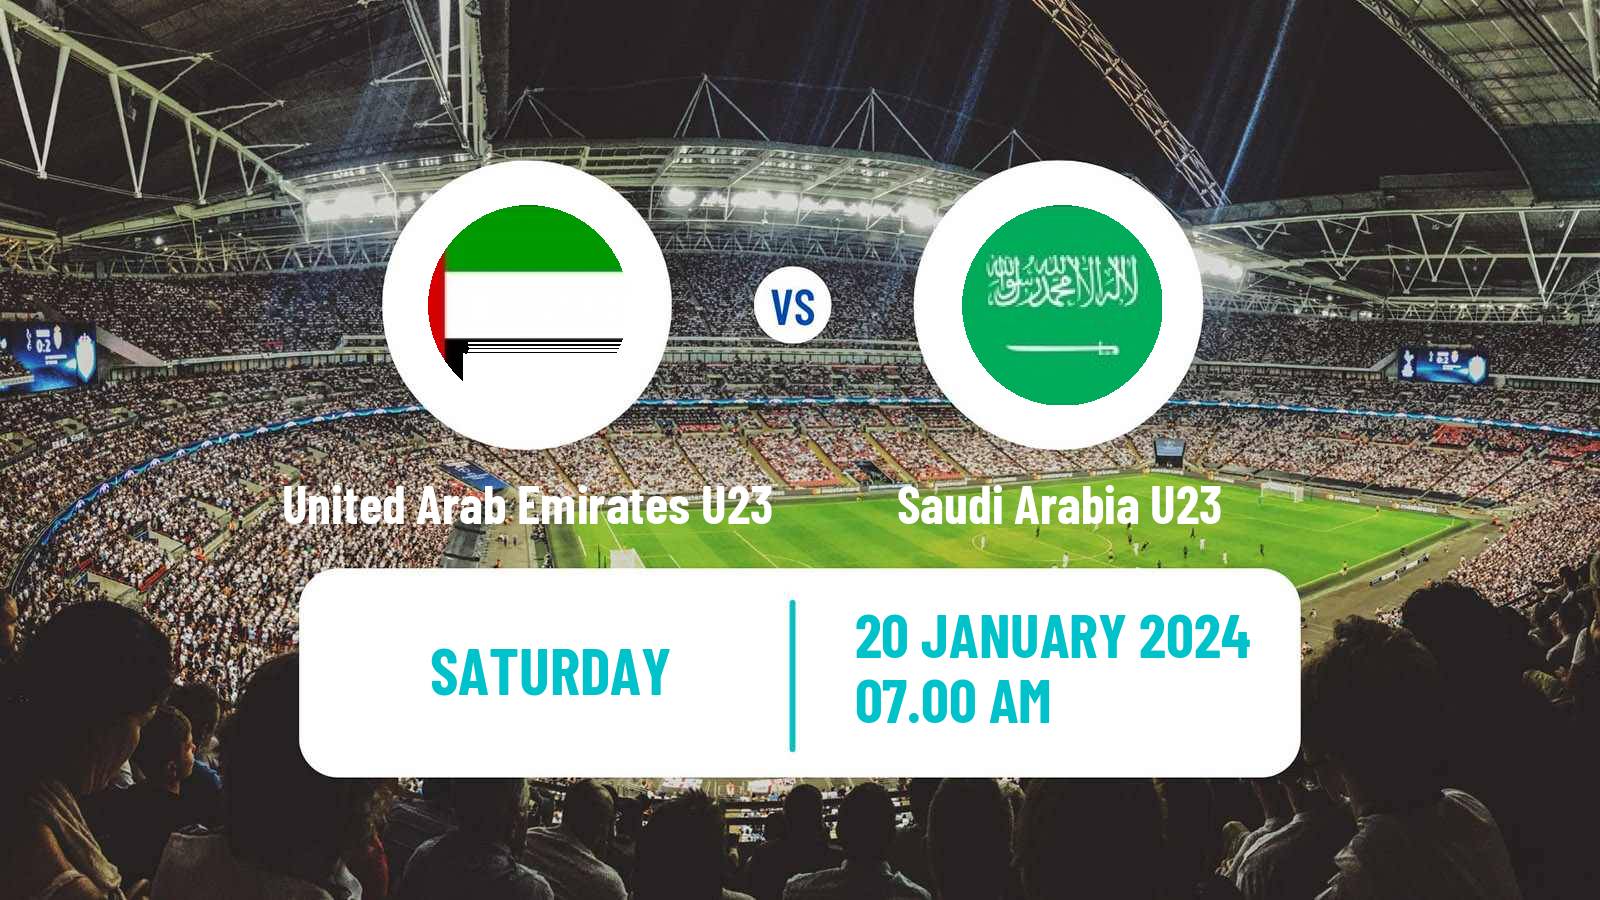 Soccer Friendly United Arab Emirates U23 - Saudi Arabia U23